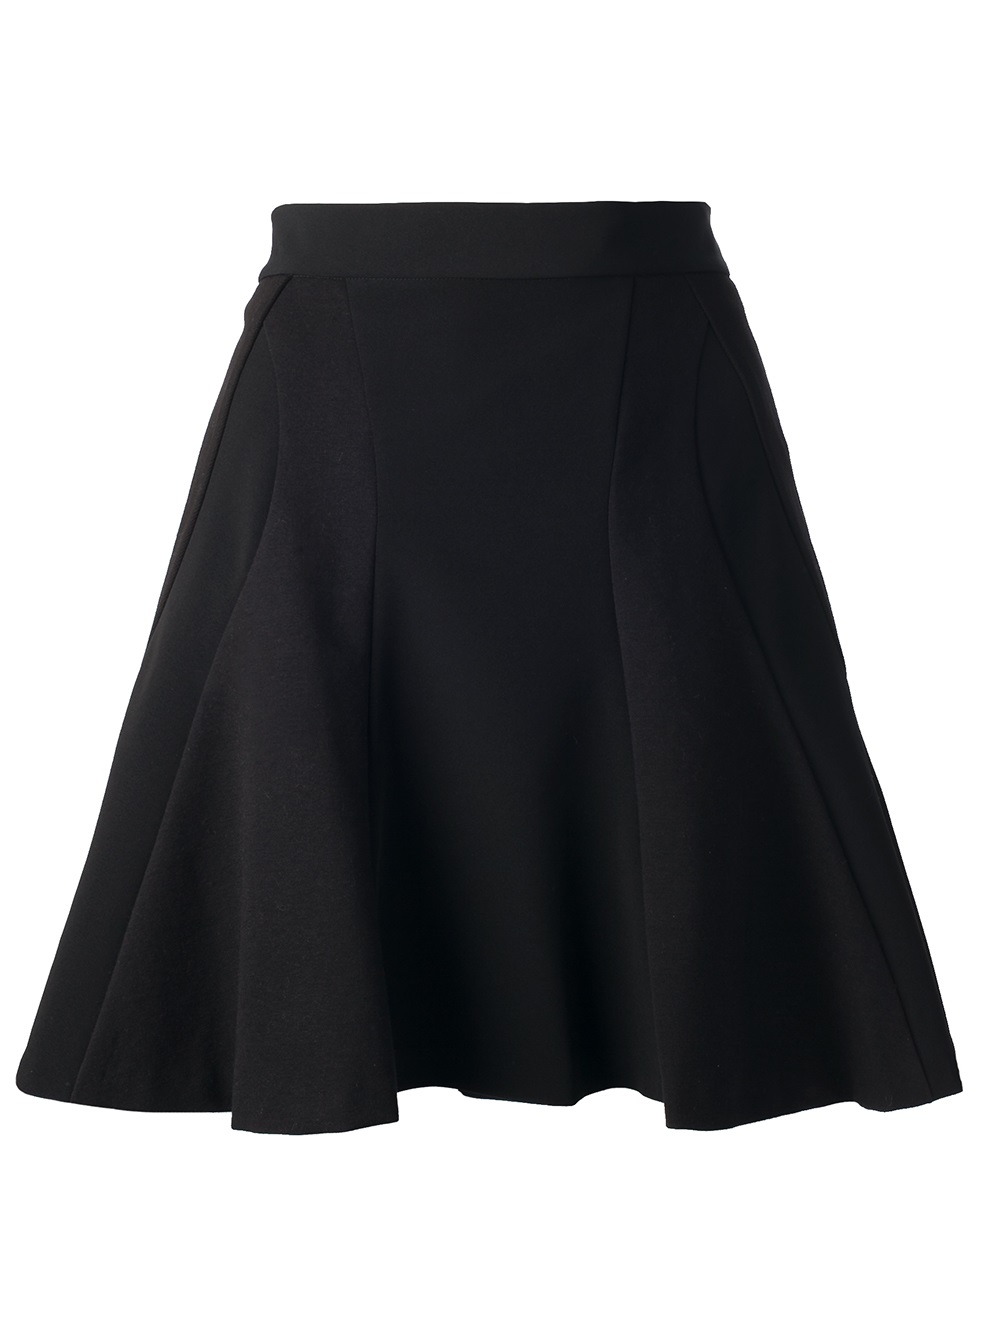 Lyst - Dkny Flared Skirt in Black